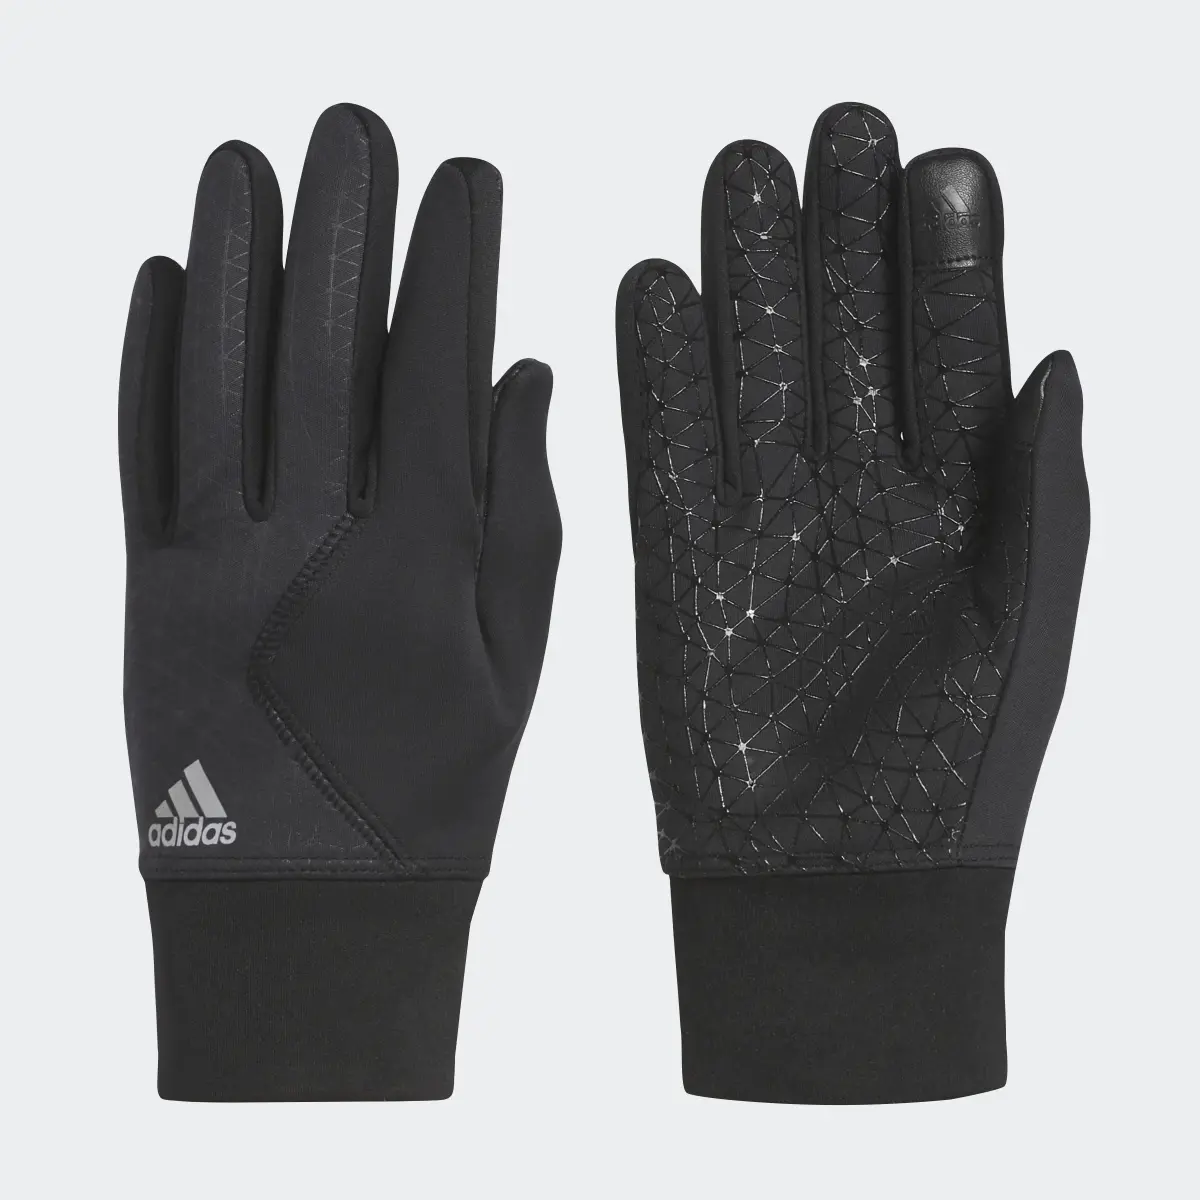 Adidas Borlite 2.0 Gloves. 2